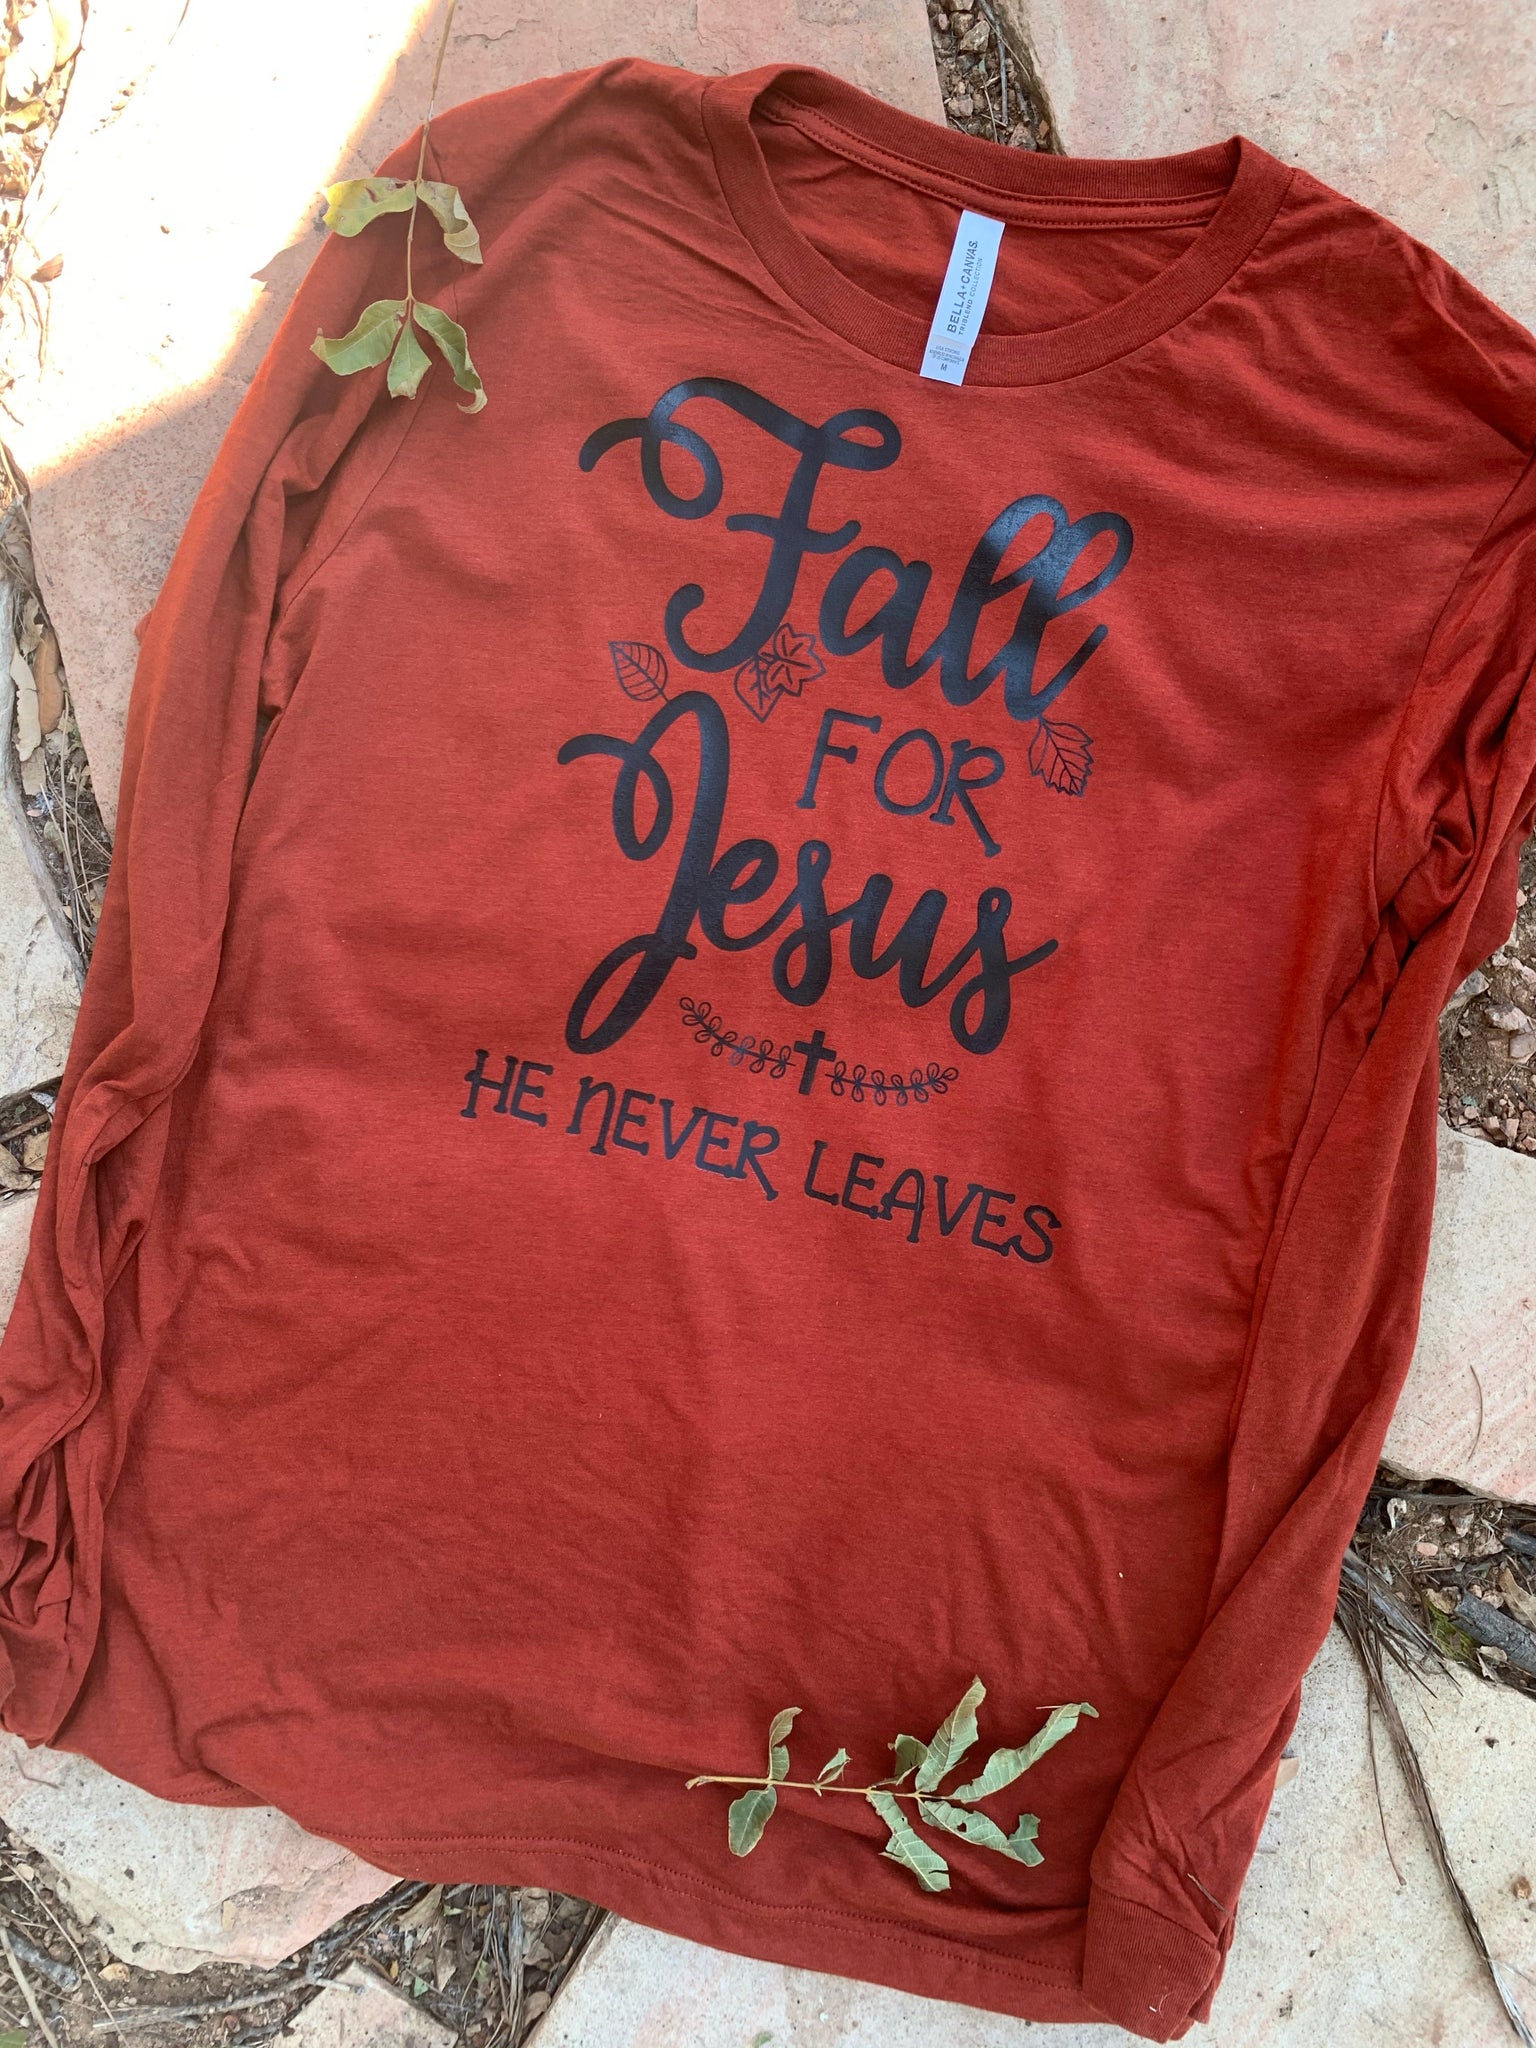 Fall on Jesus